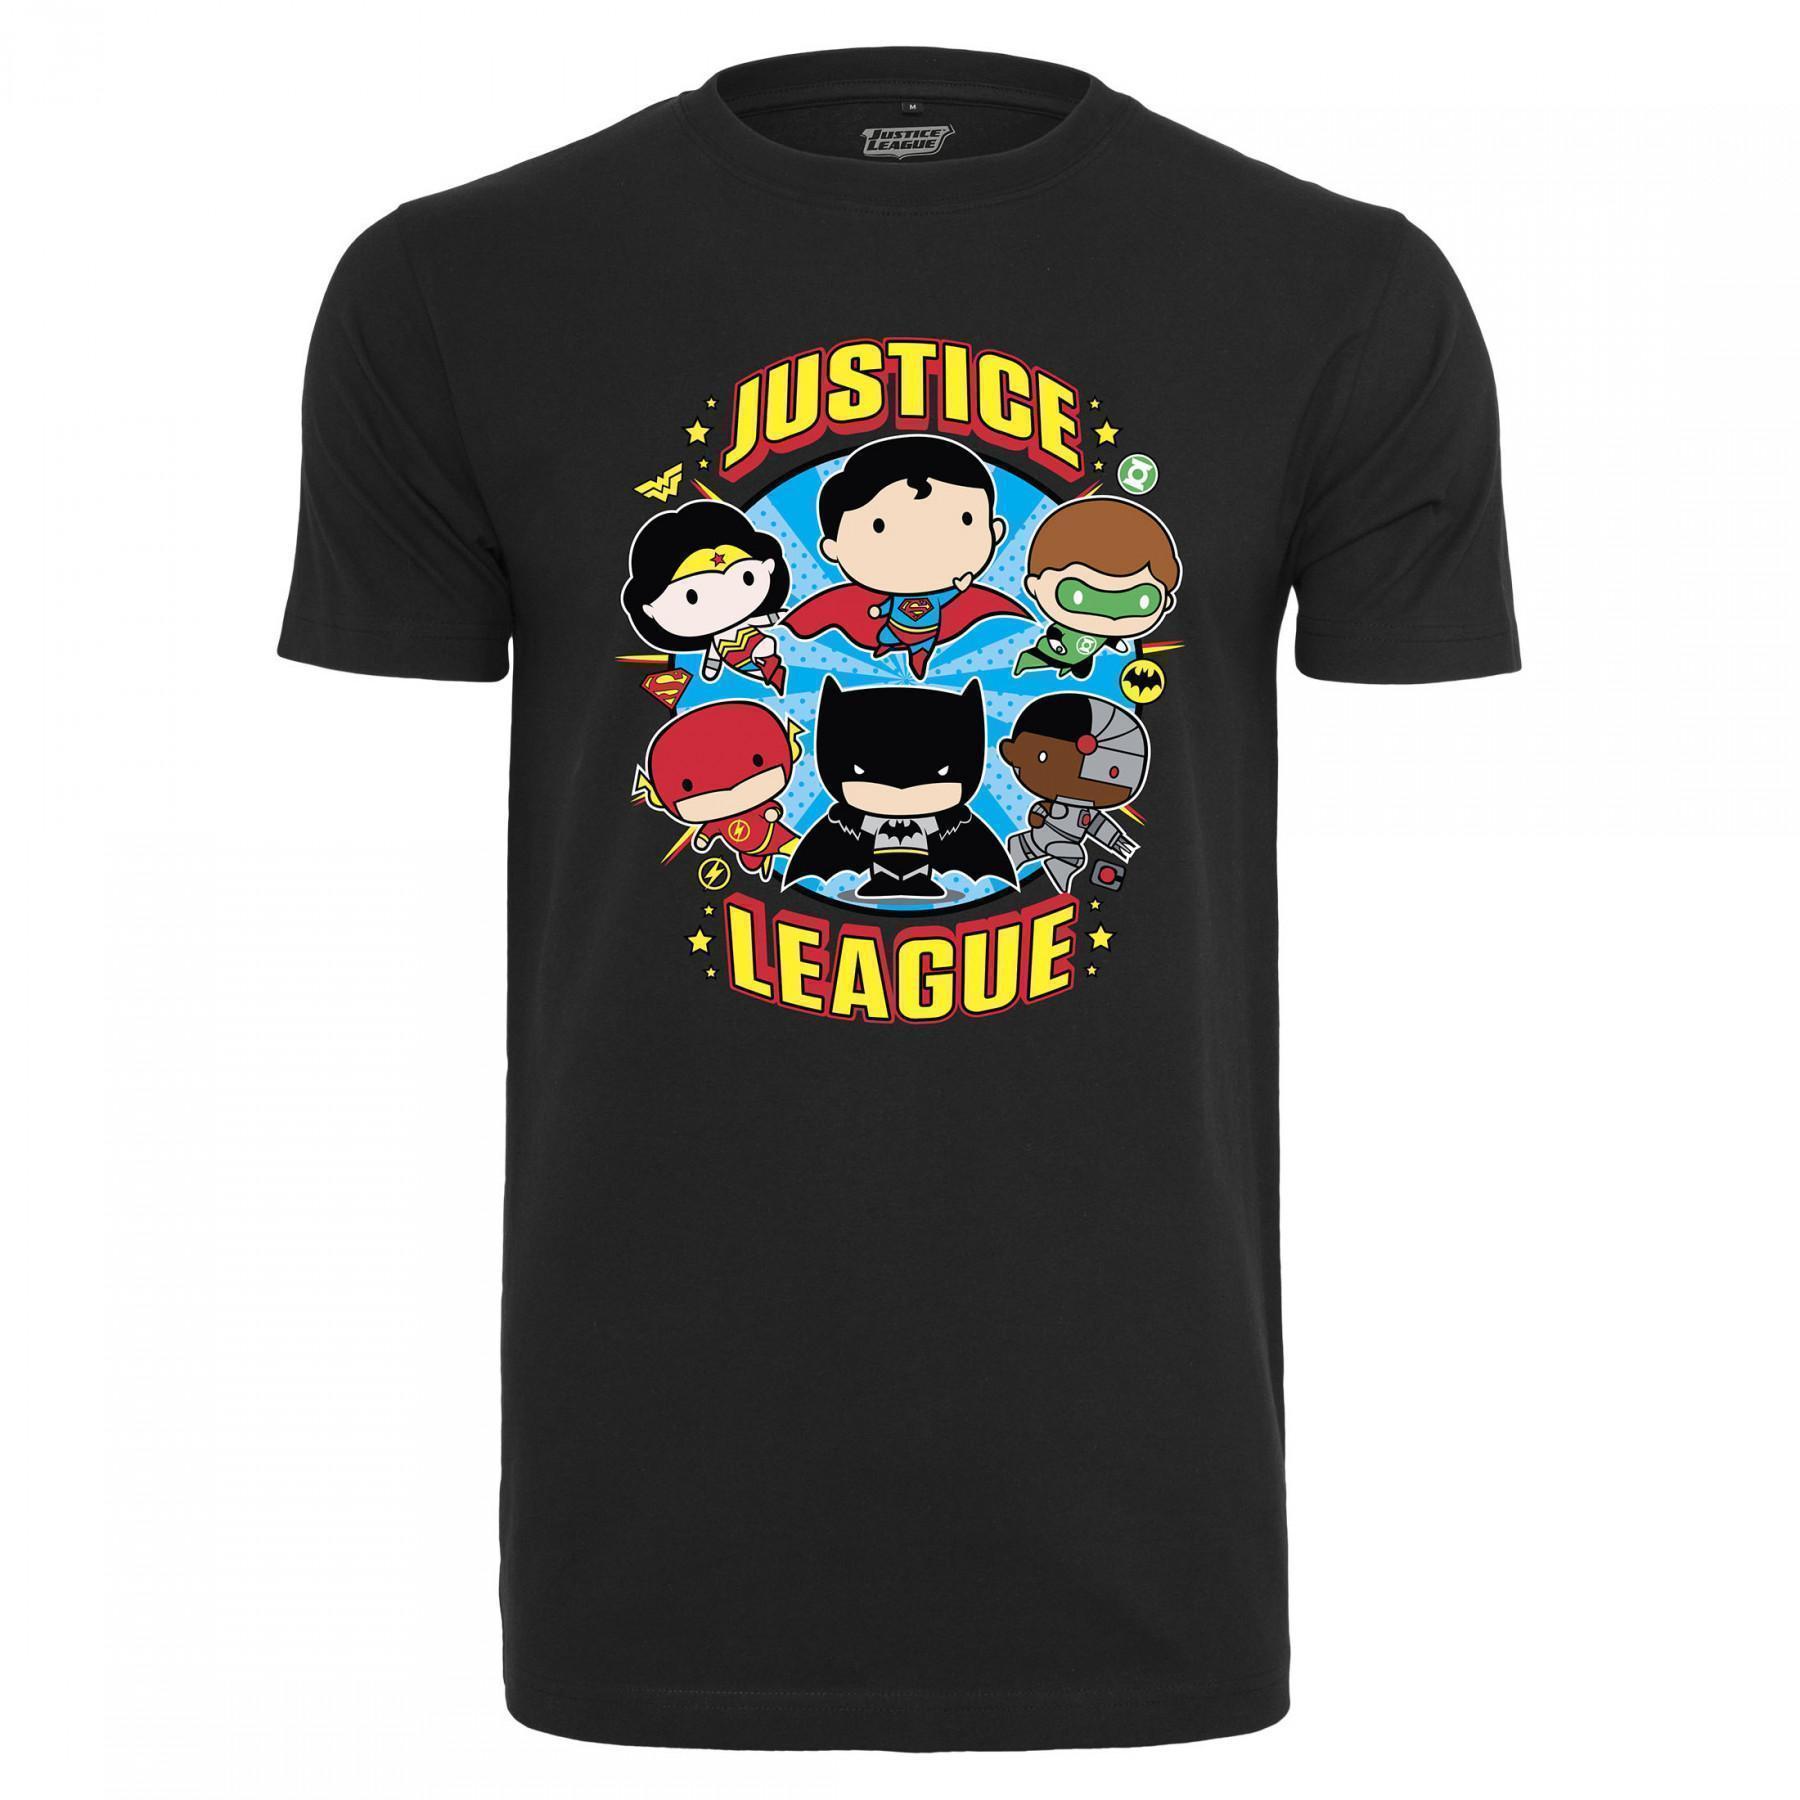 Urban Classic jutice league comic crew fit t-shirt